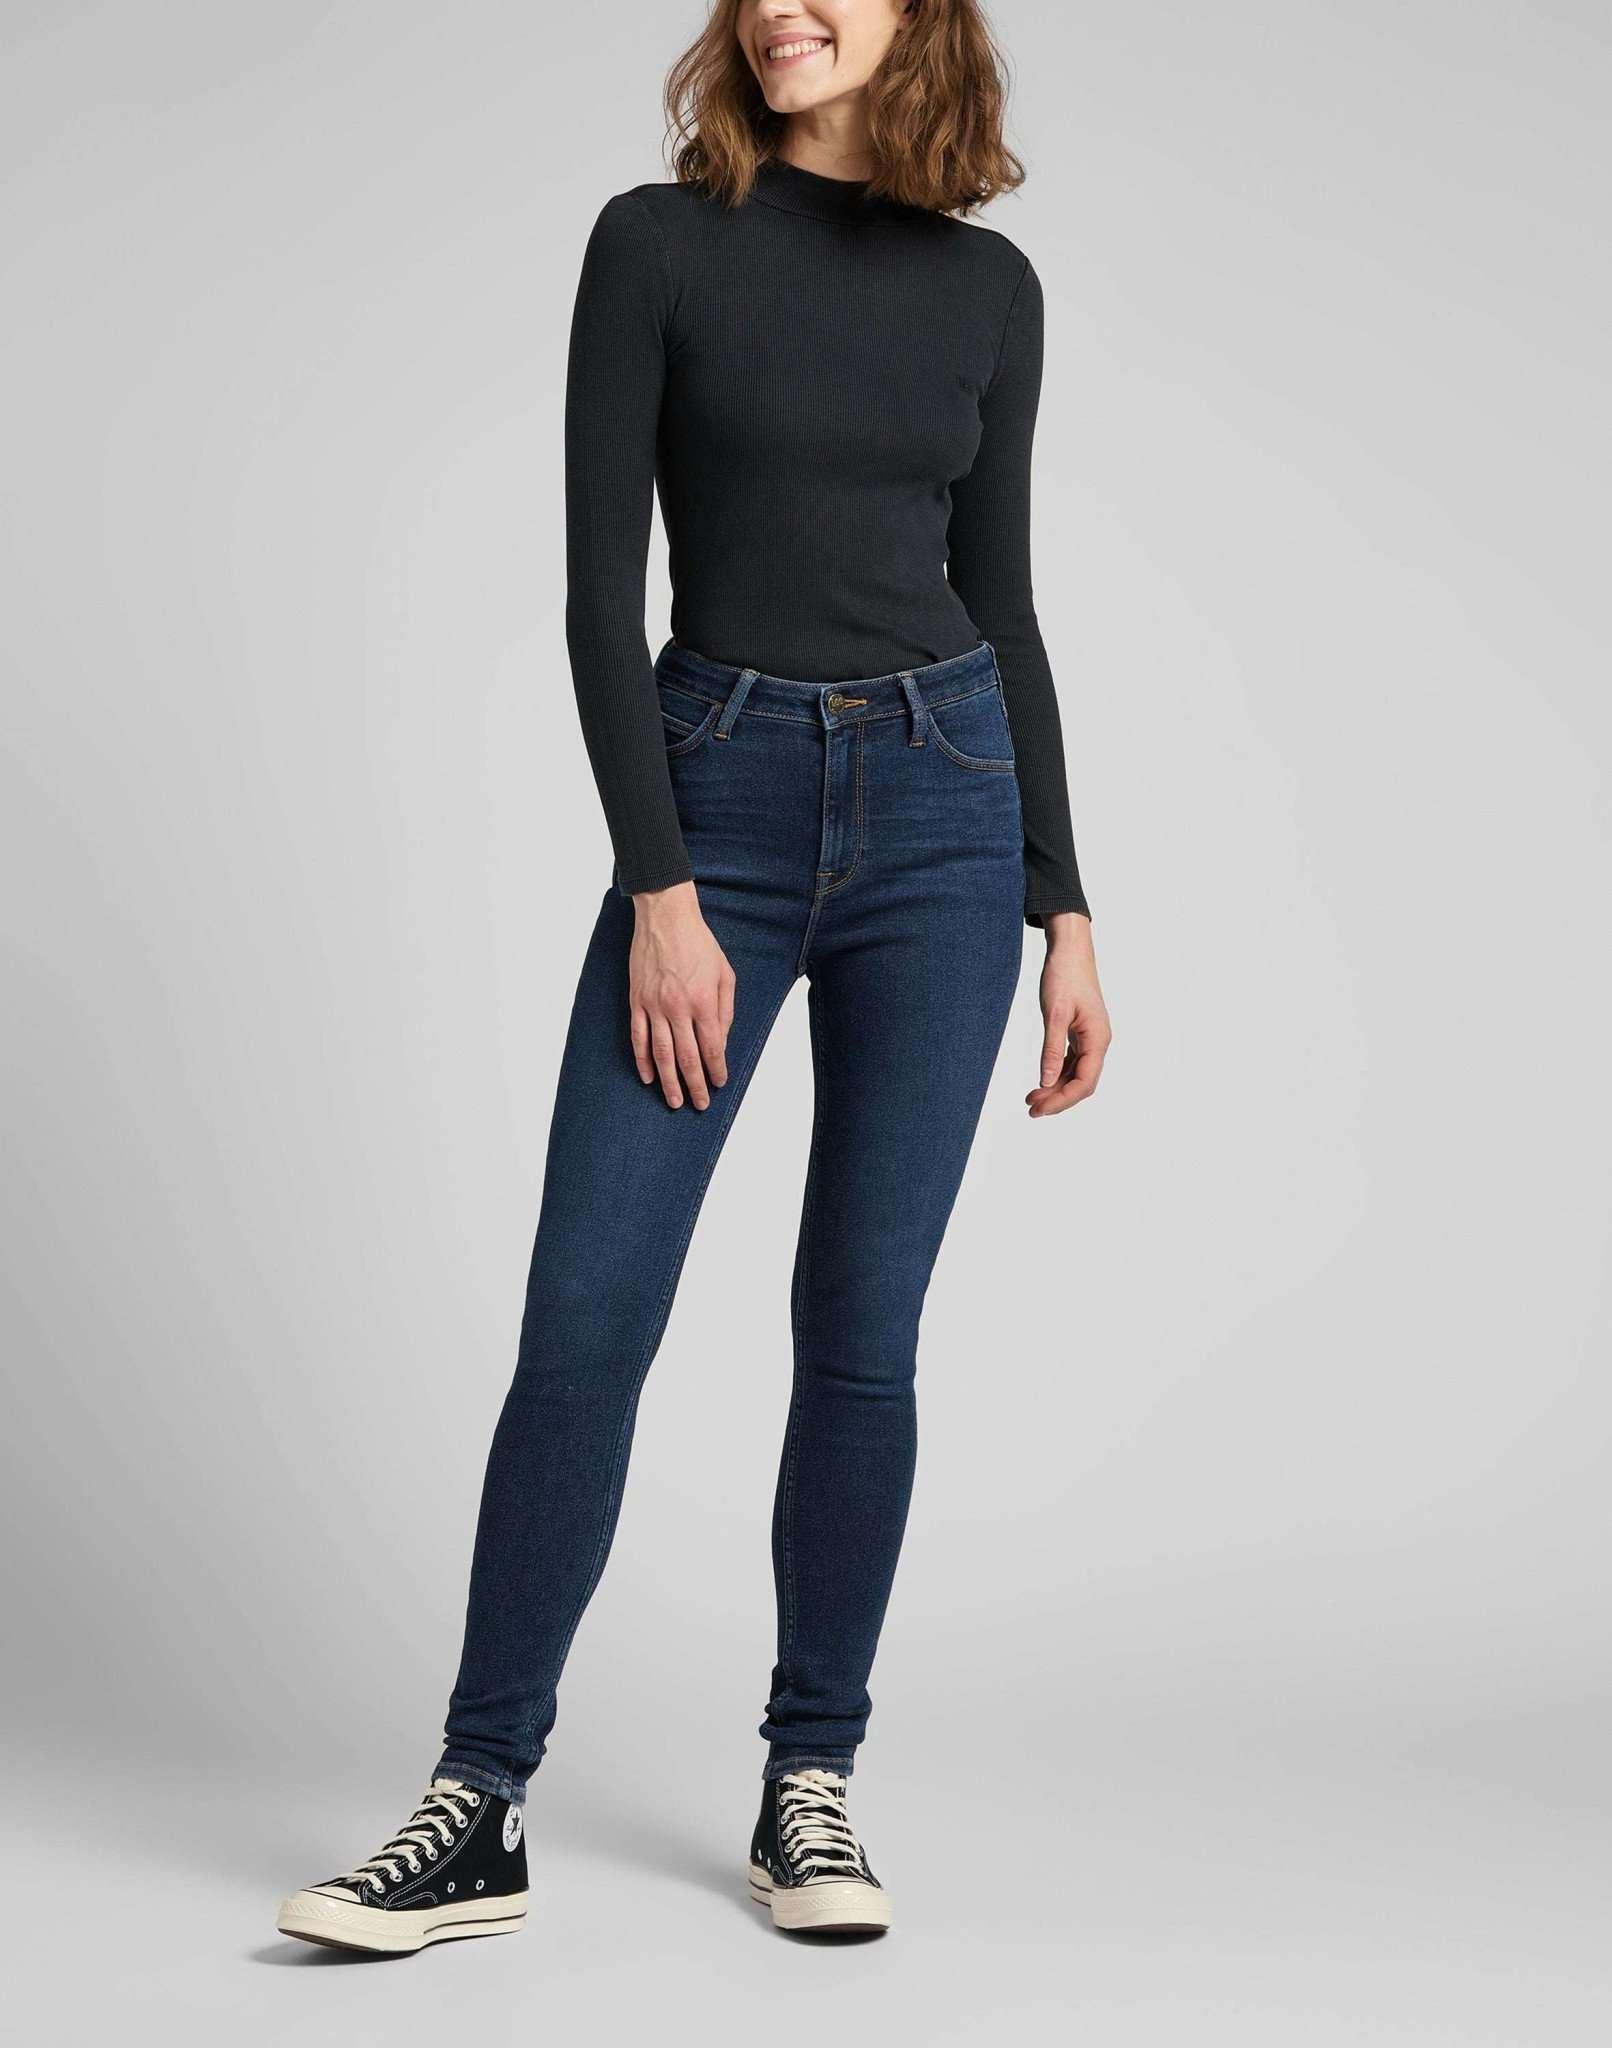 Lee  Jeans Super Skinny Fit Ivy High Waist 